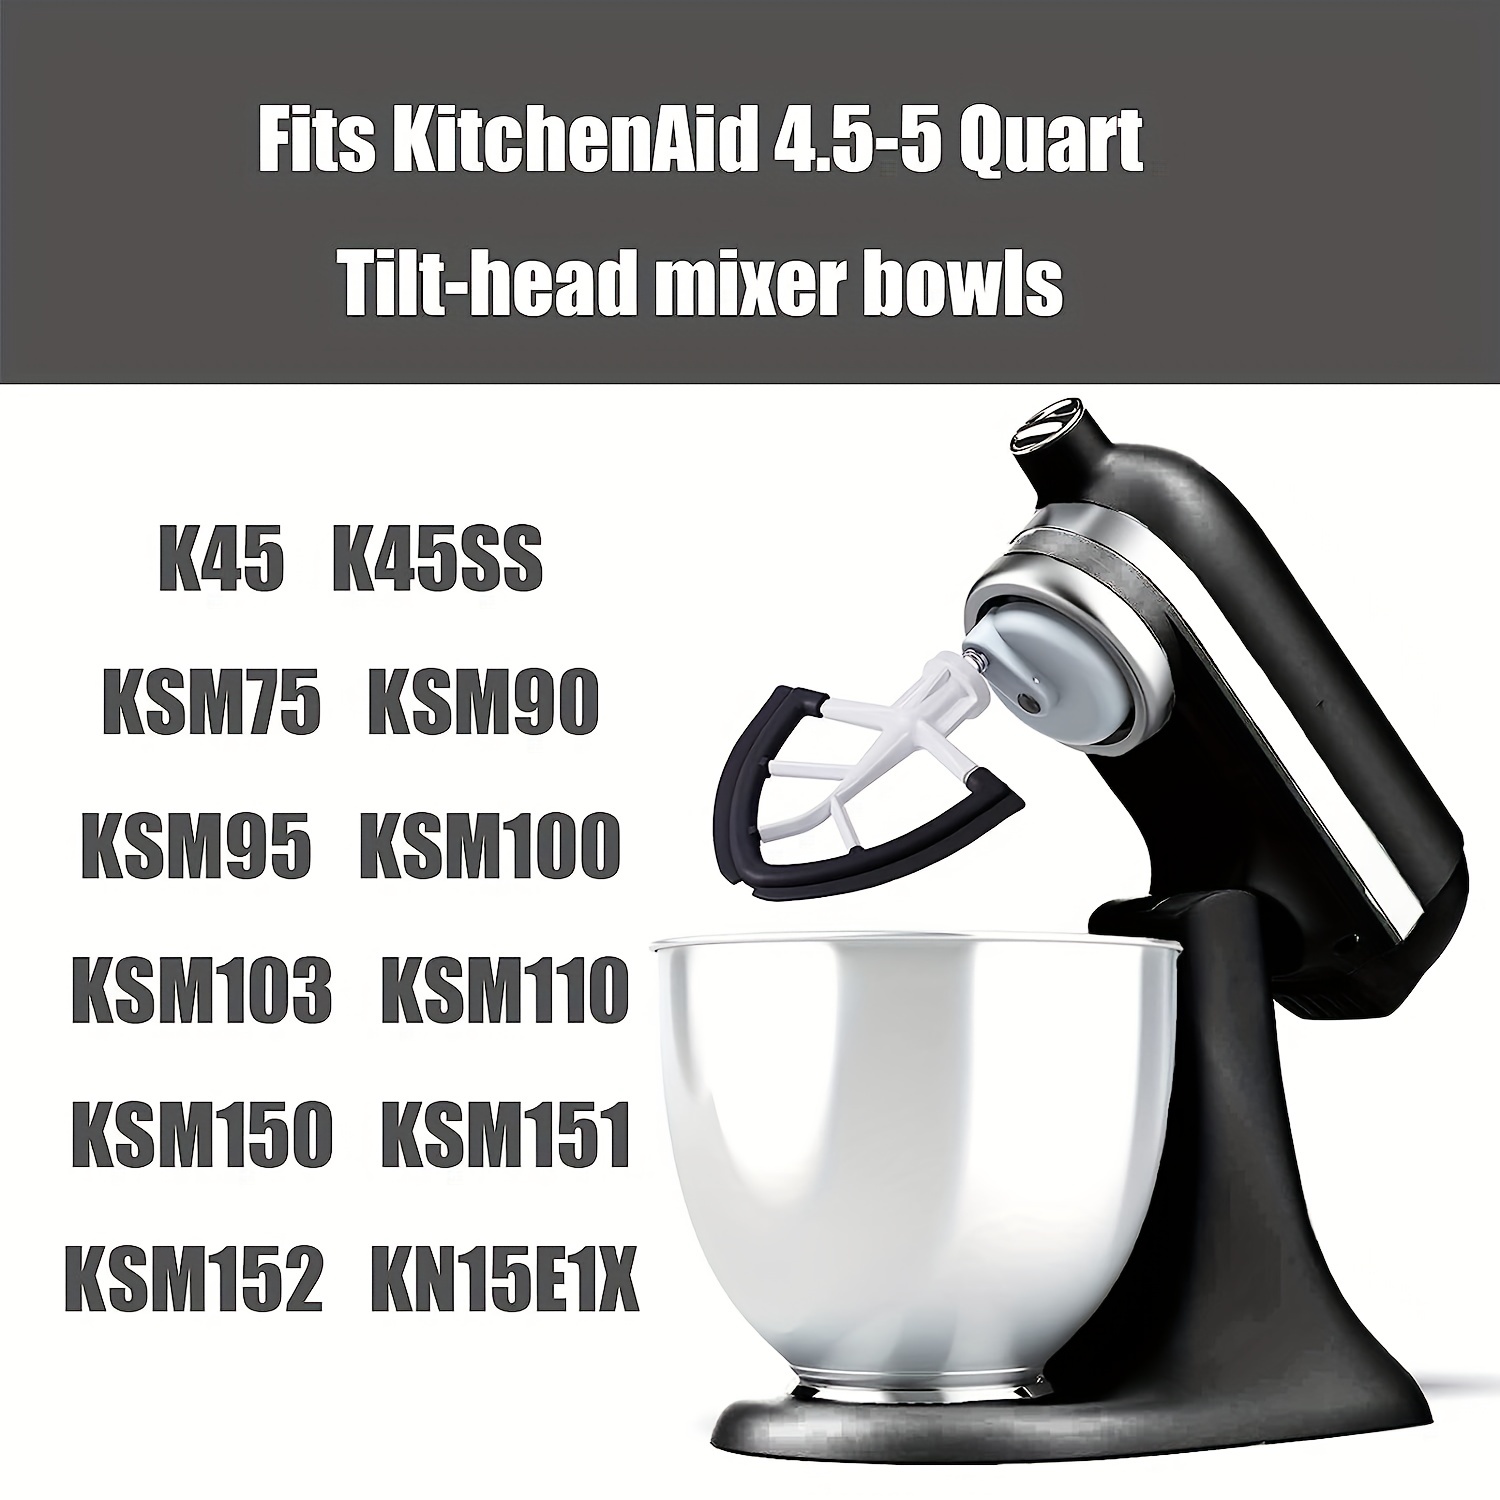 Flex Edge Beater For Kitchenaid, 4.5-5 Quart KitchenAid Mixer Attachments,  Fits Tilt-Head Stand Mixer Bowls For 4.5-5 Quart Bowls, Kitchen Aid